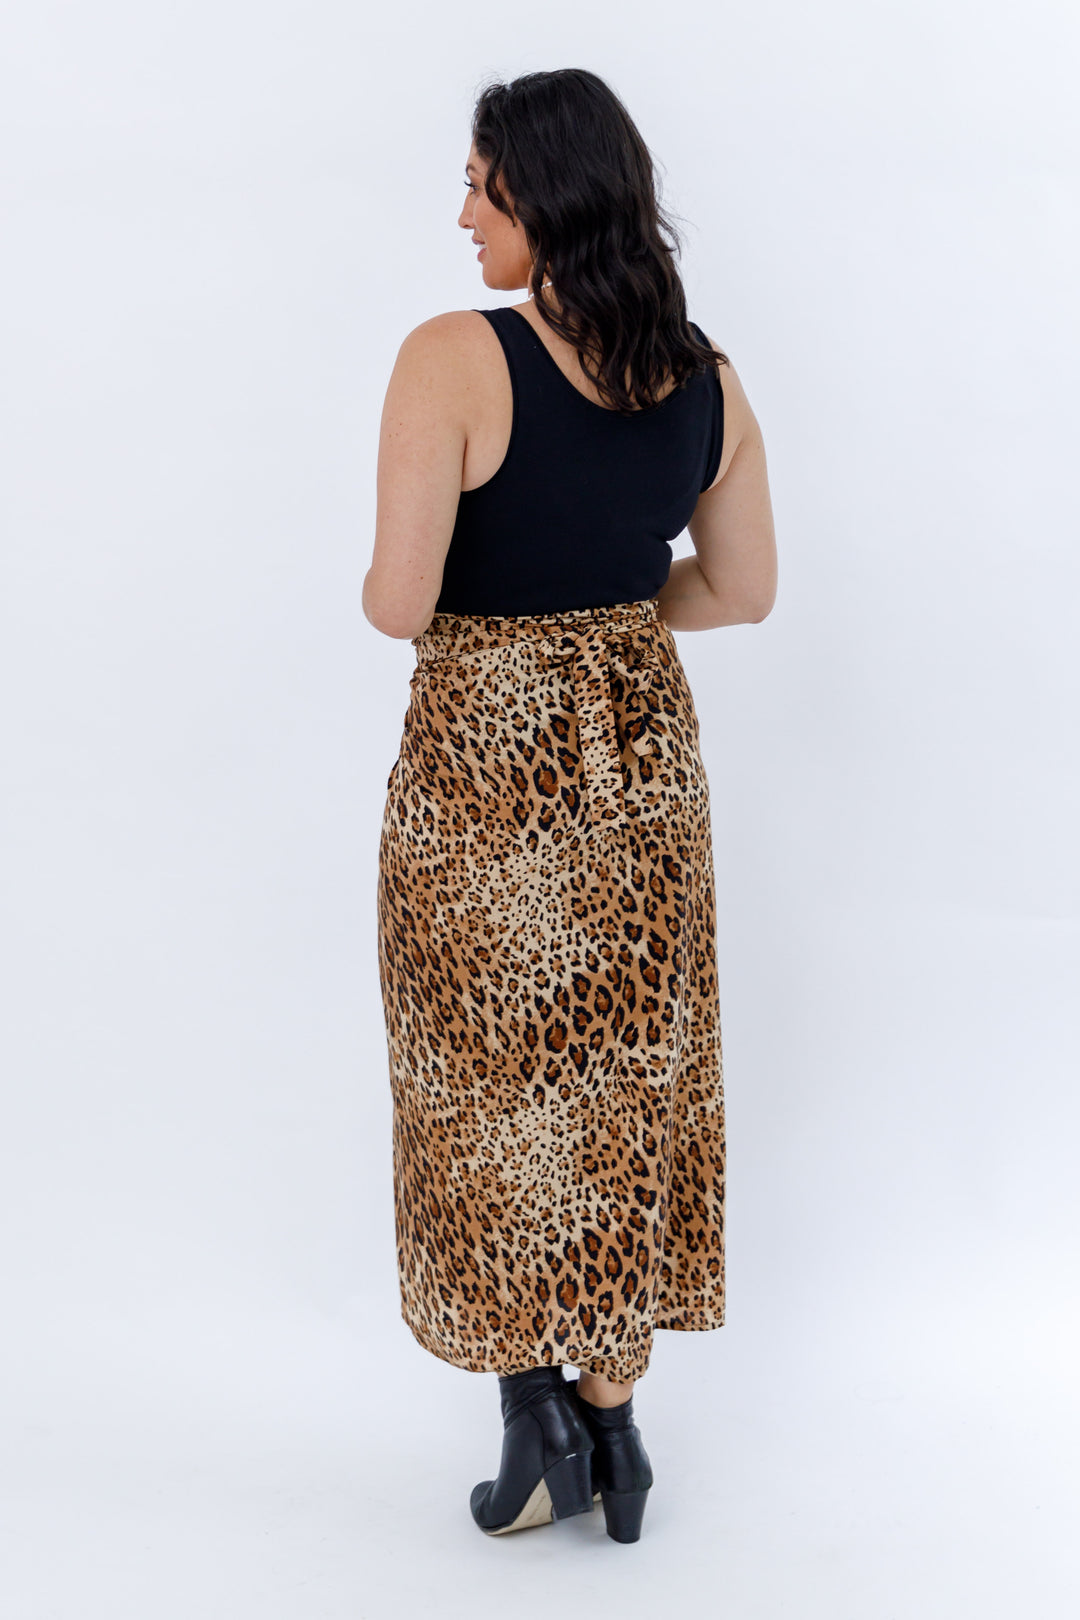 Japanese Long Wrap Skirt - Cougar Print